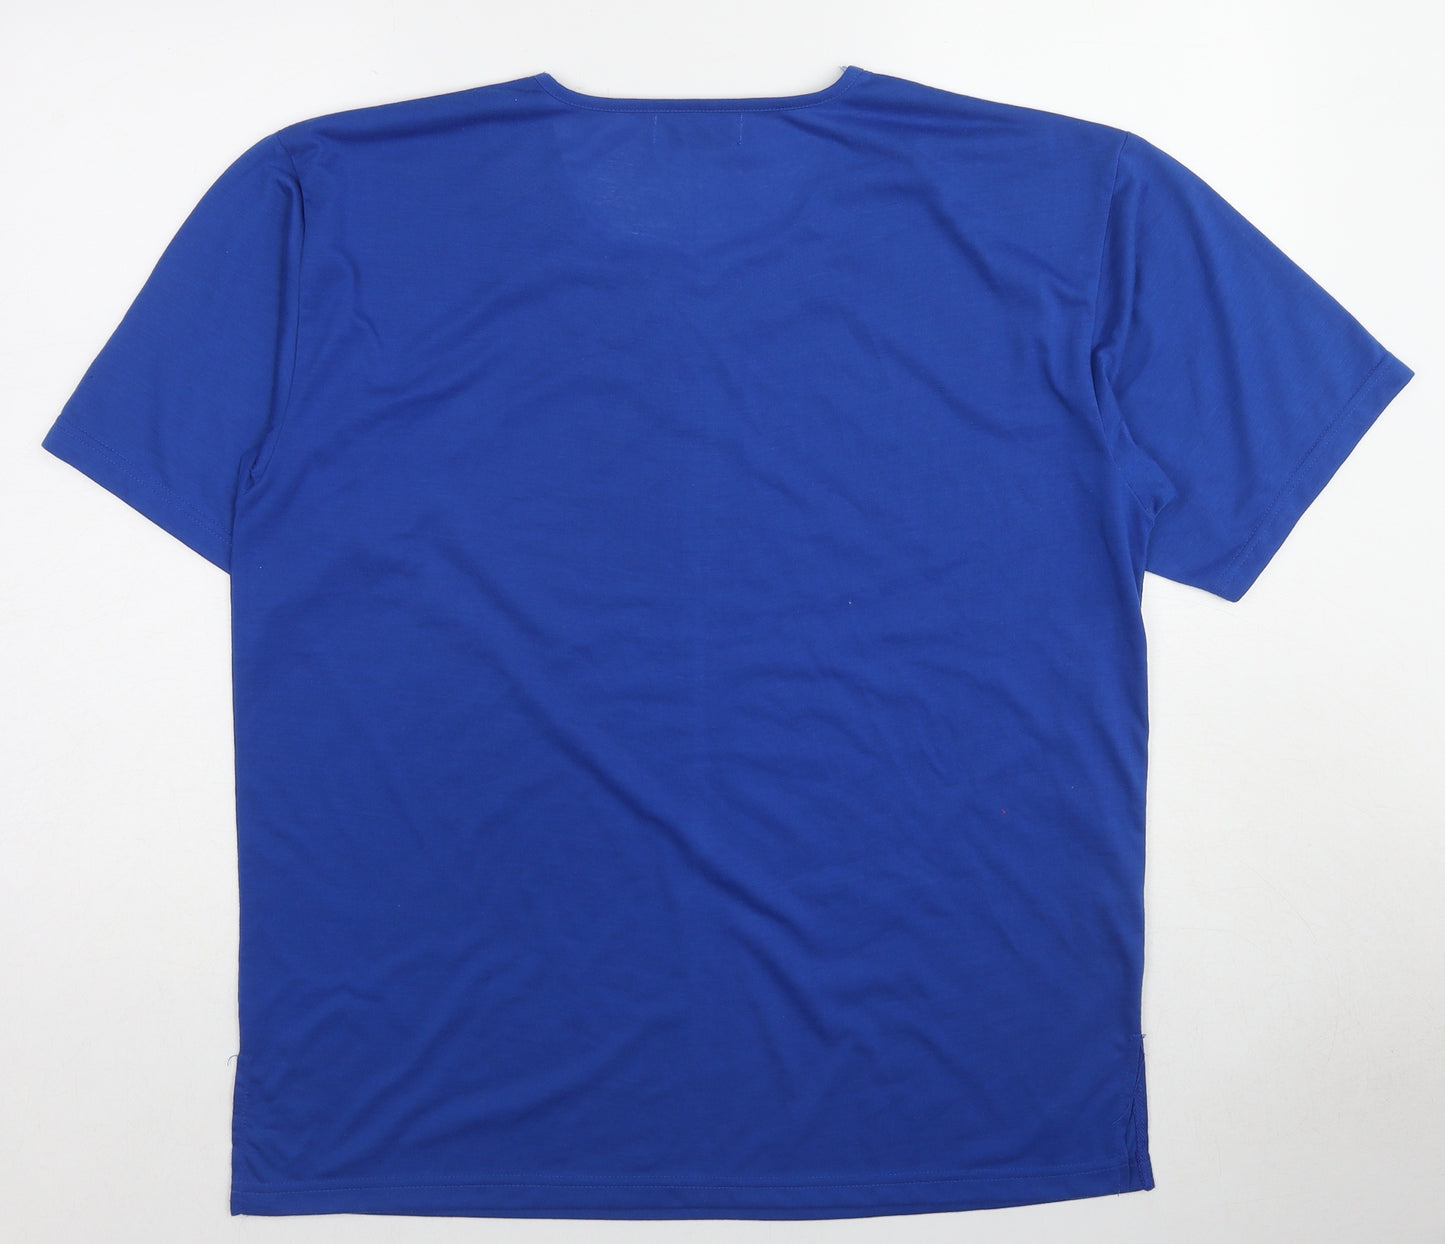 Lucky Womens Blue Cotton Basic T-Shirt Size L Crew Neck